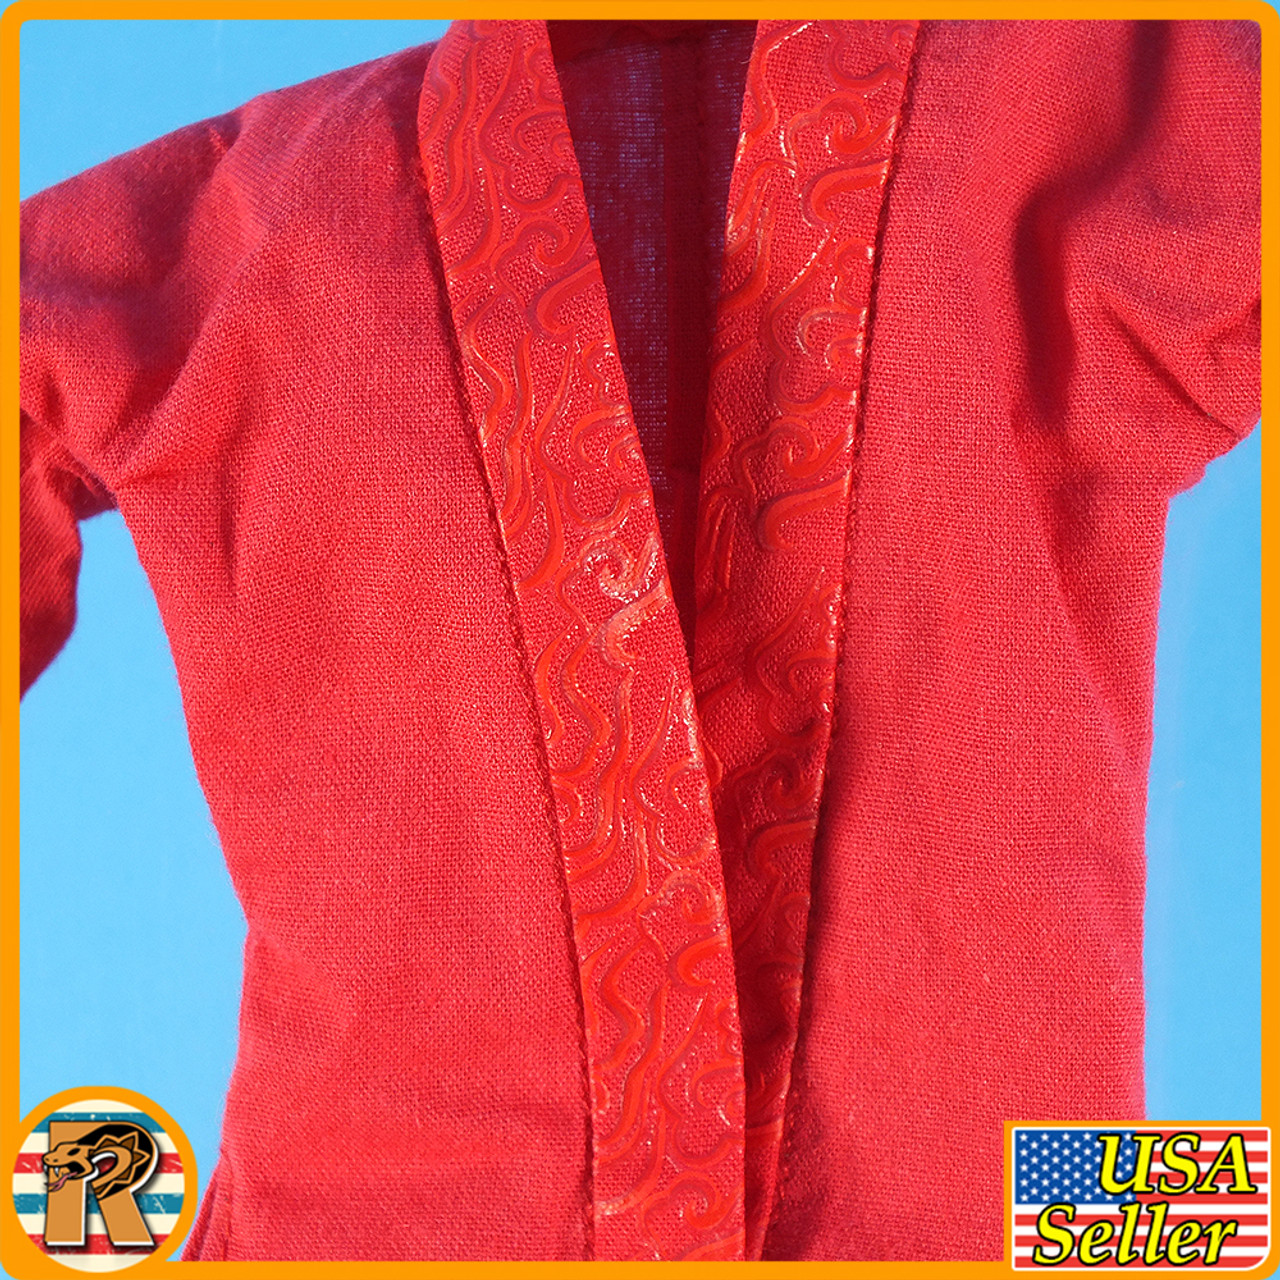 Hua Mulan - Red Tunic (Female) - 1/6 Scale -